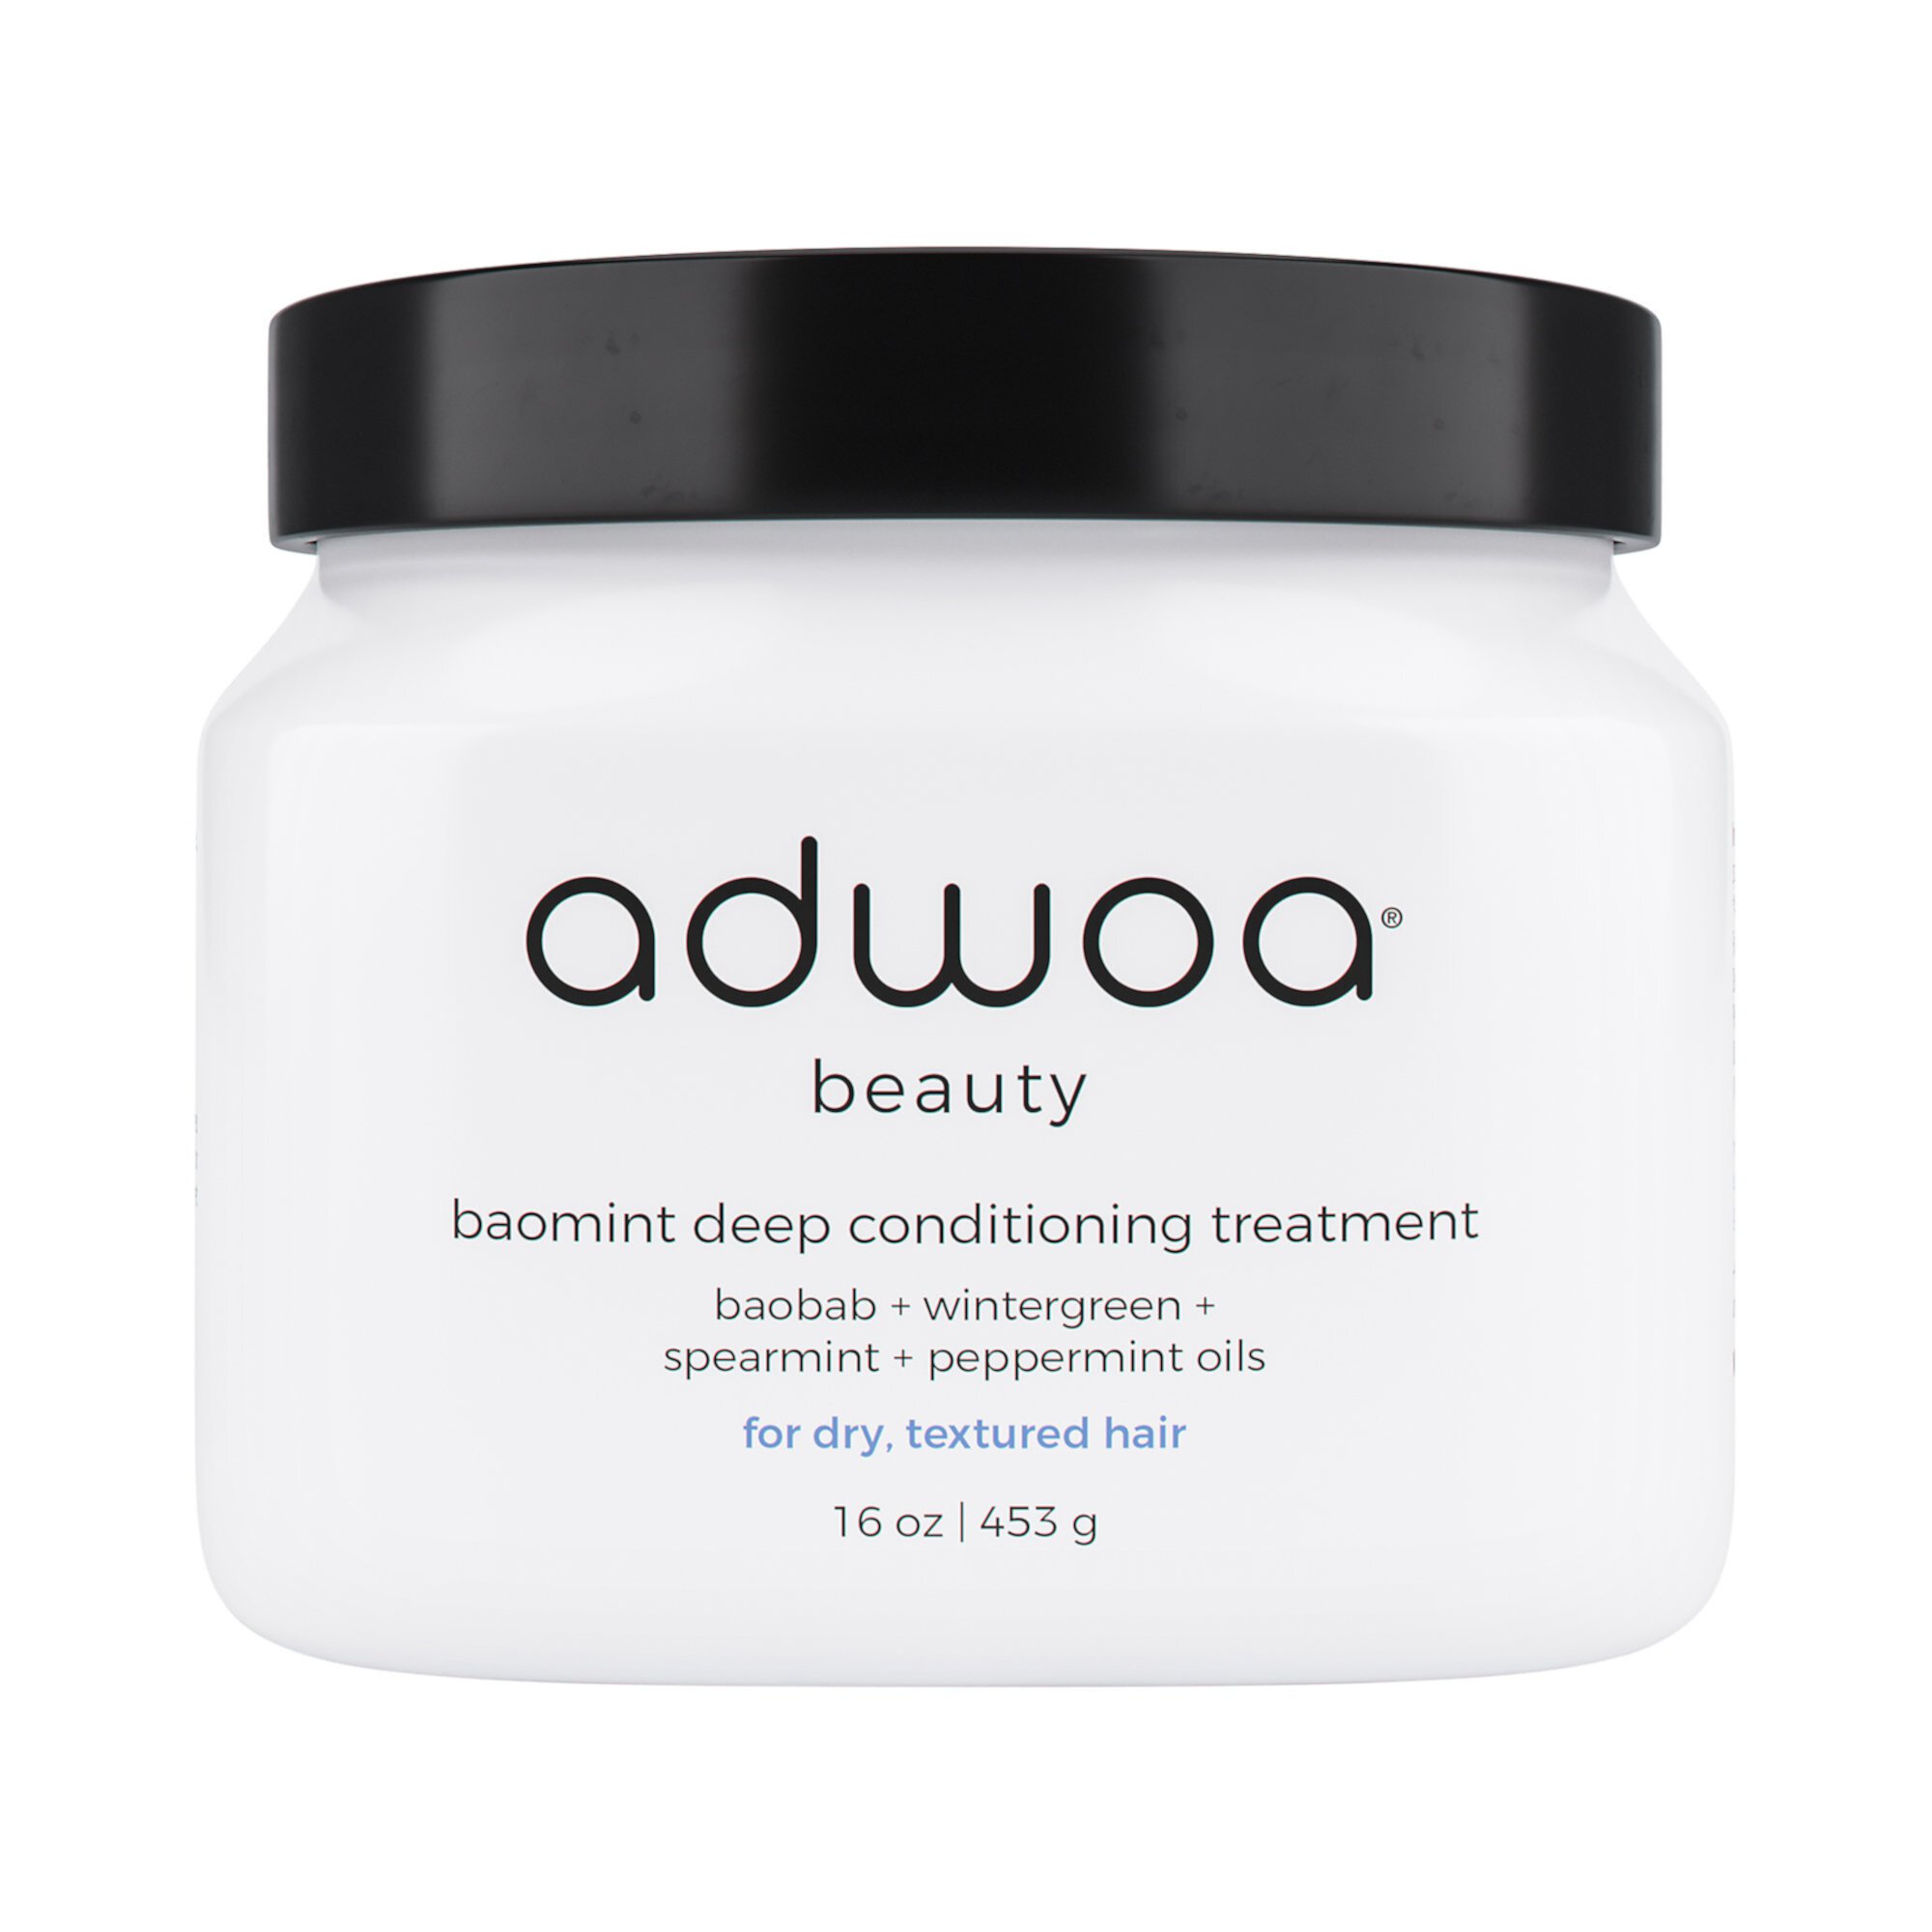 Baomint™ Deep Conditioning Treatment Adwoa beauty